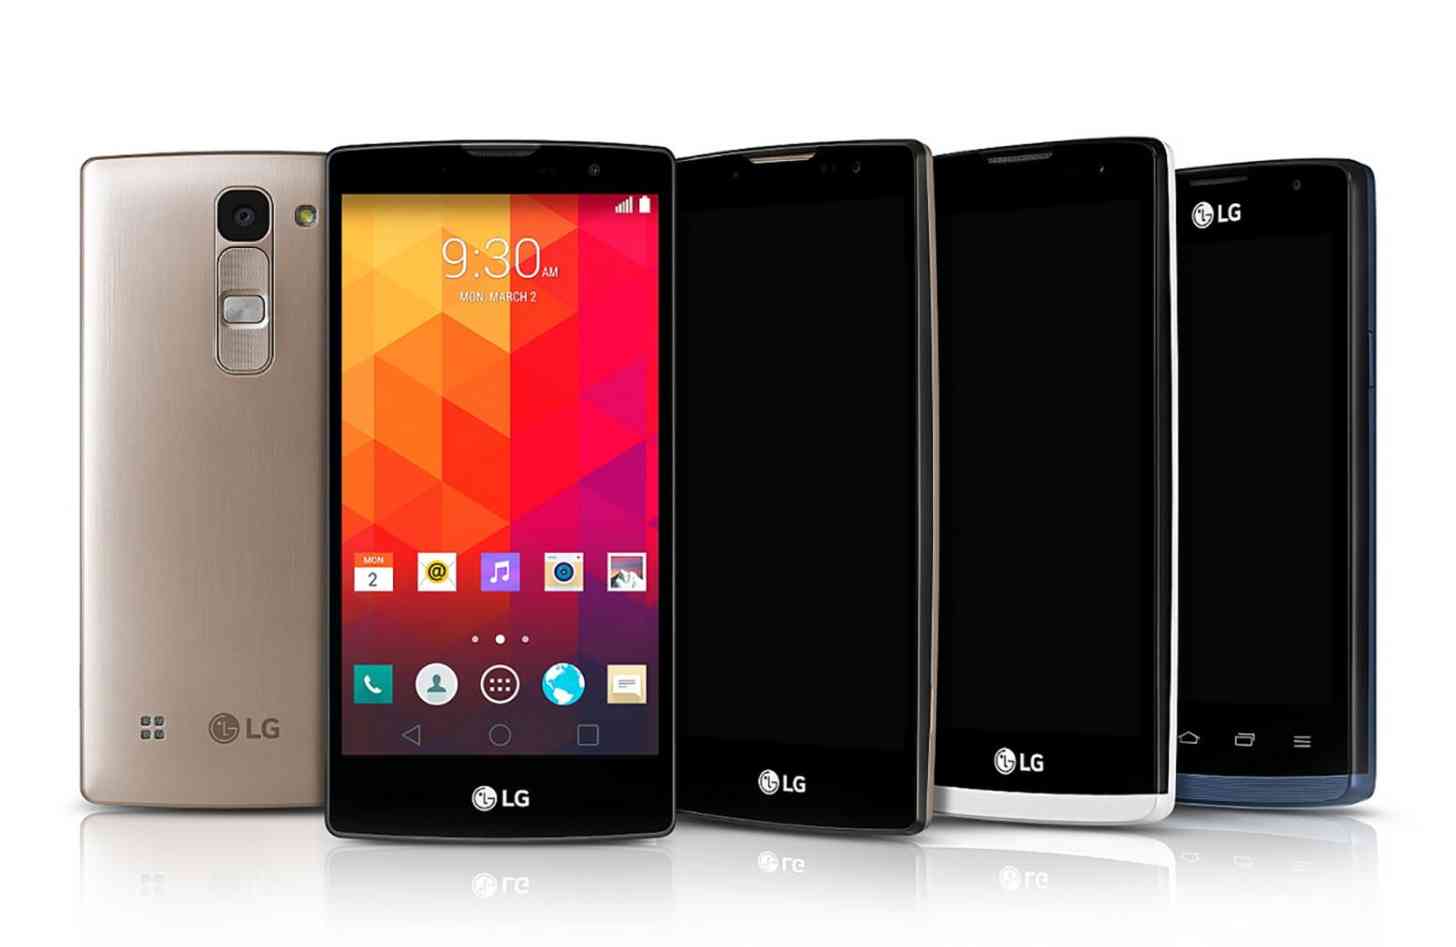 LG Android phones MWC 2015 Magna, Spirit, Leon, Joy